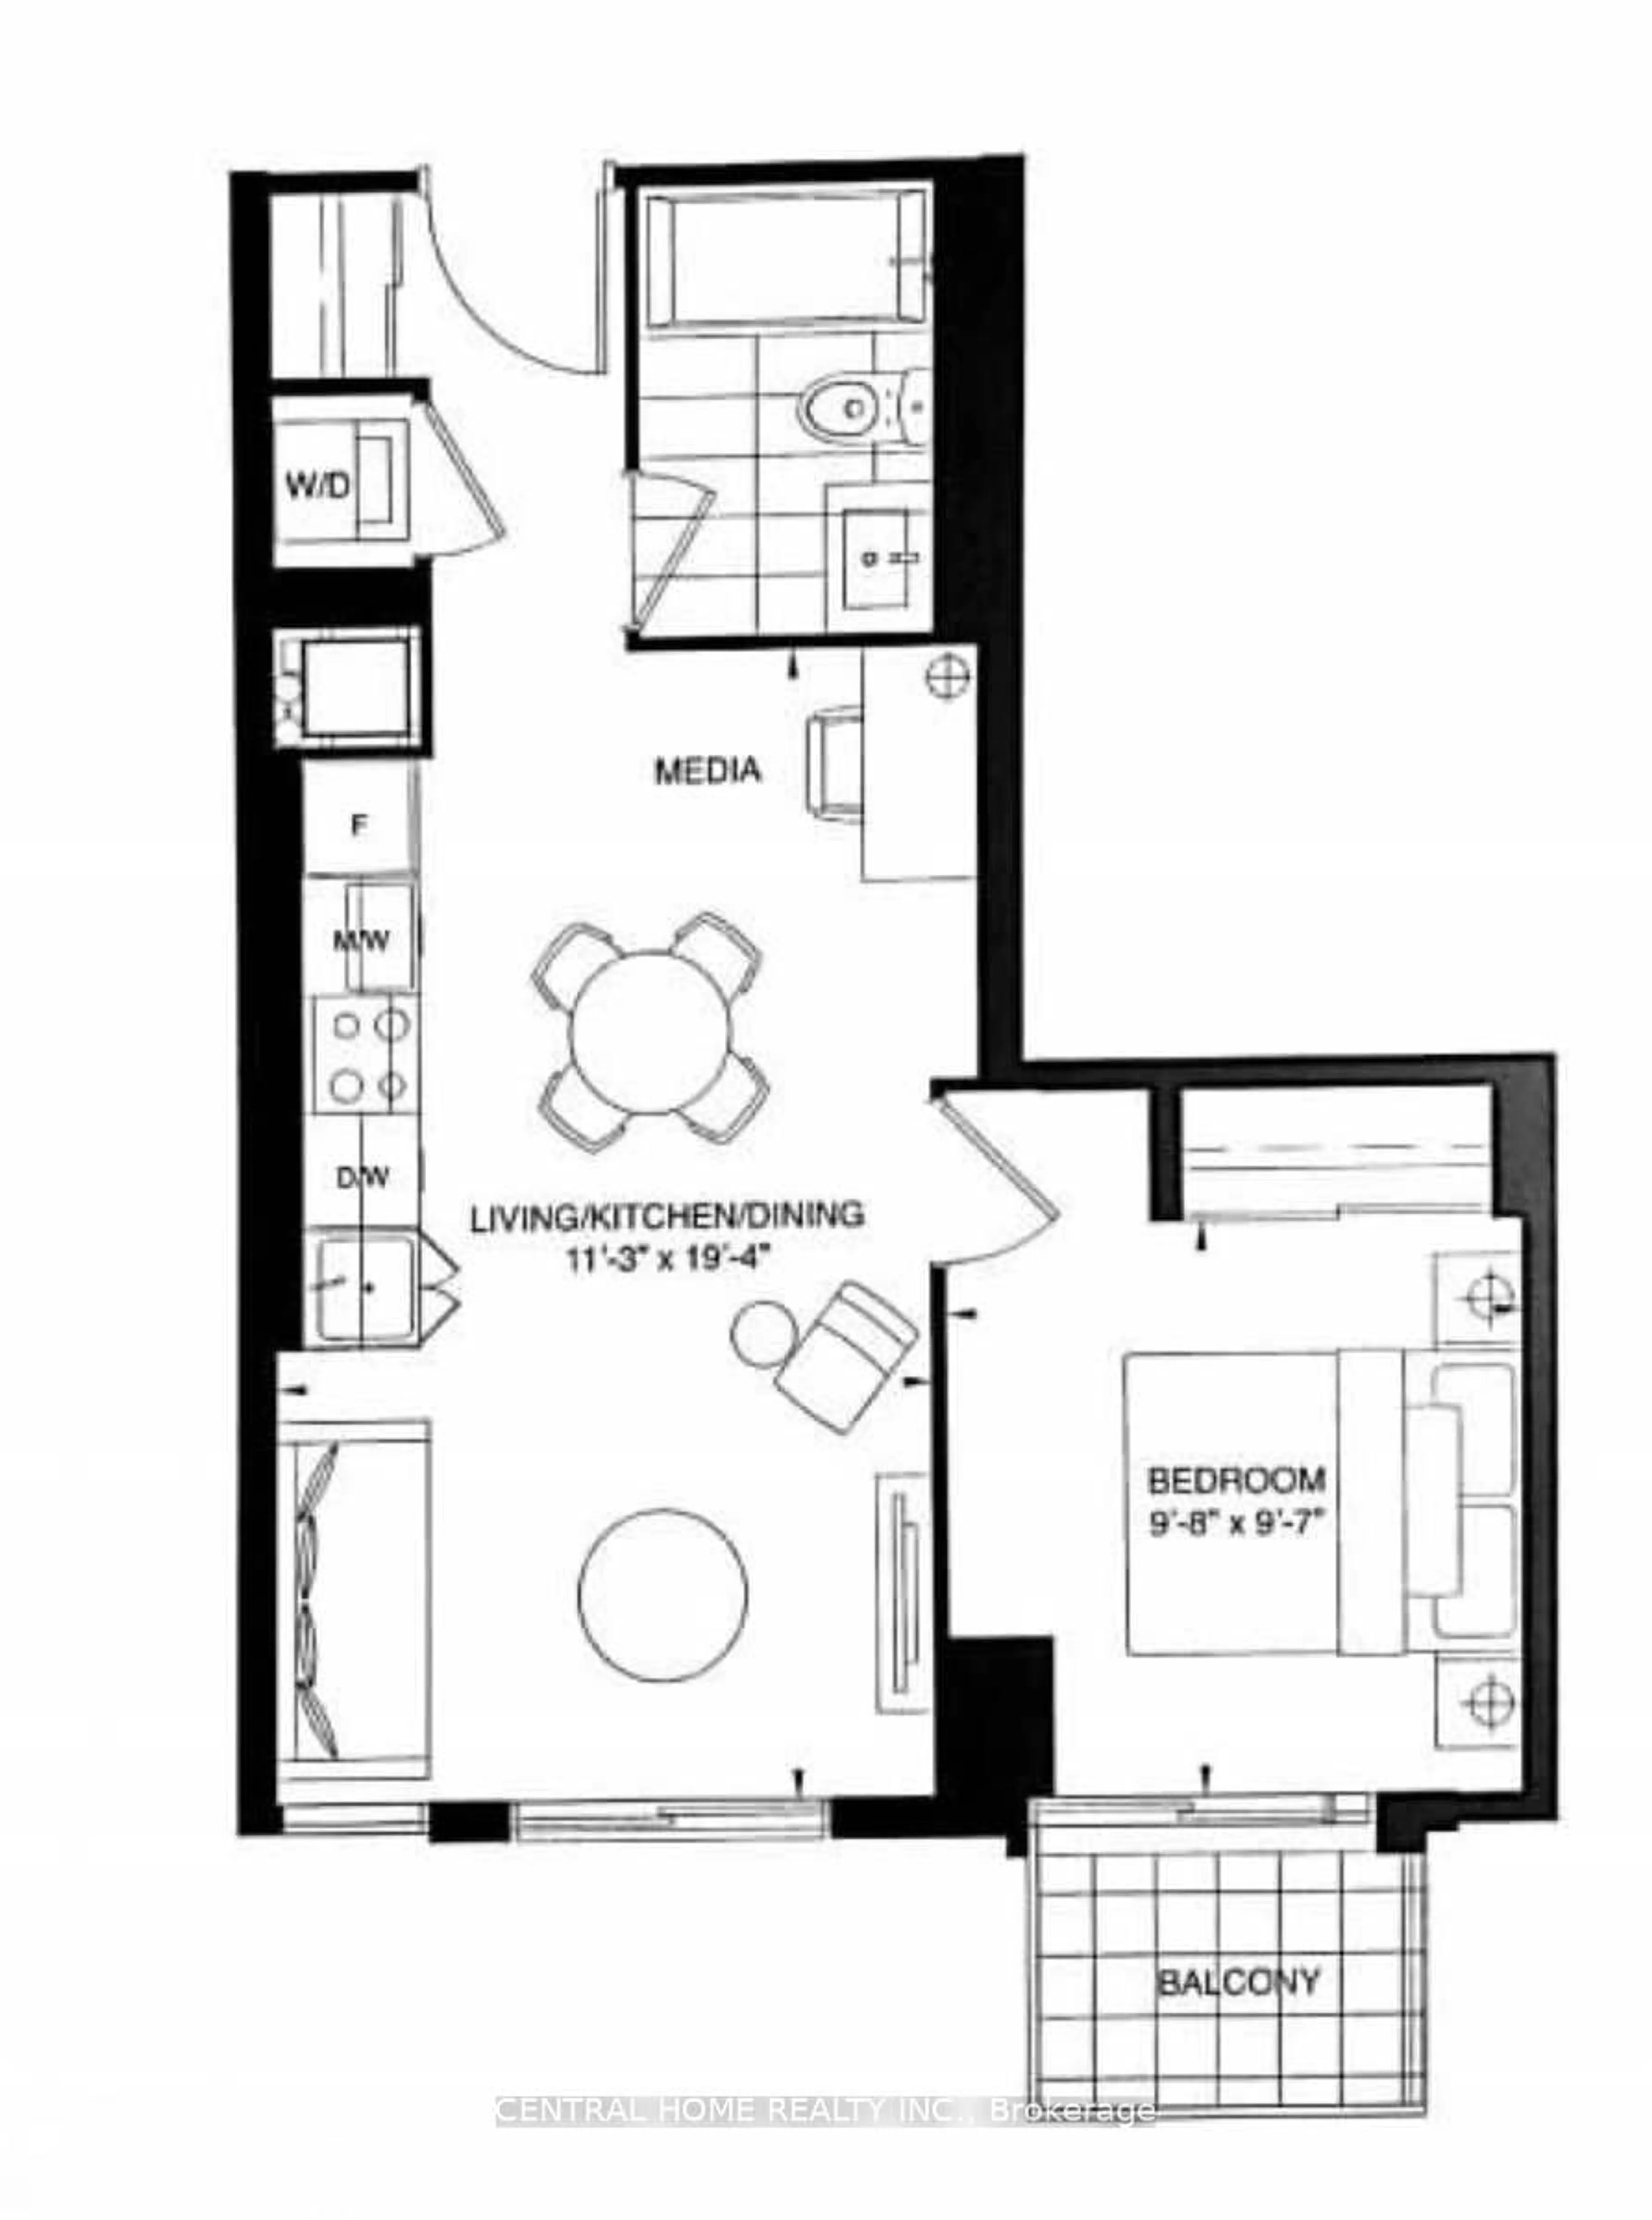 Floor plan for 251 Jarvis St #3104, Toronto Ontario M5B 2C2